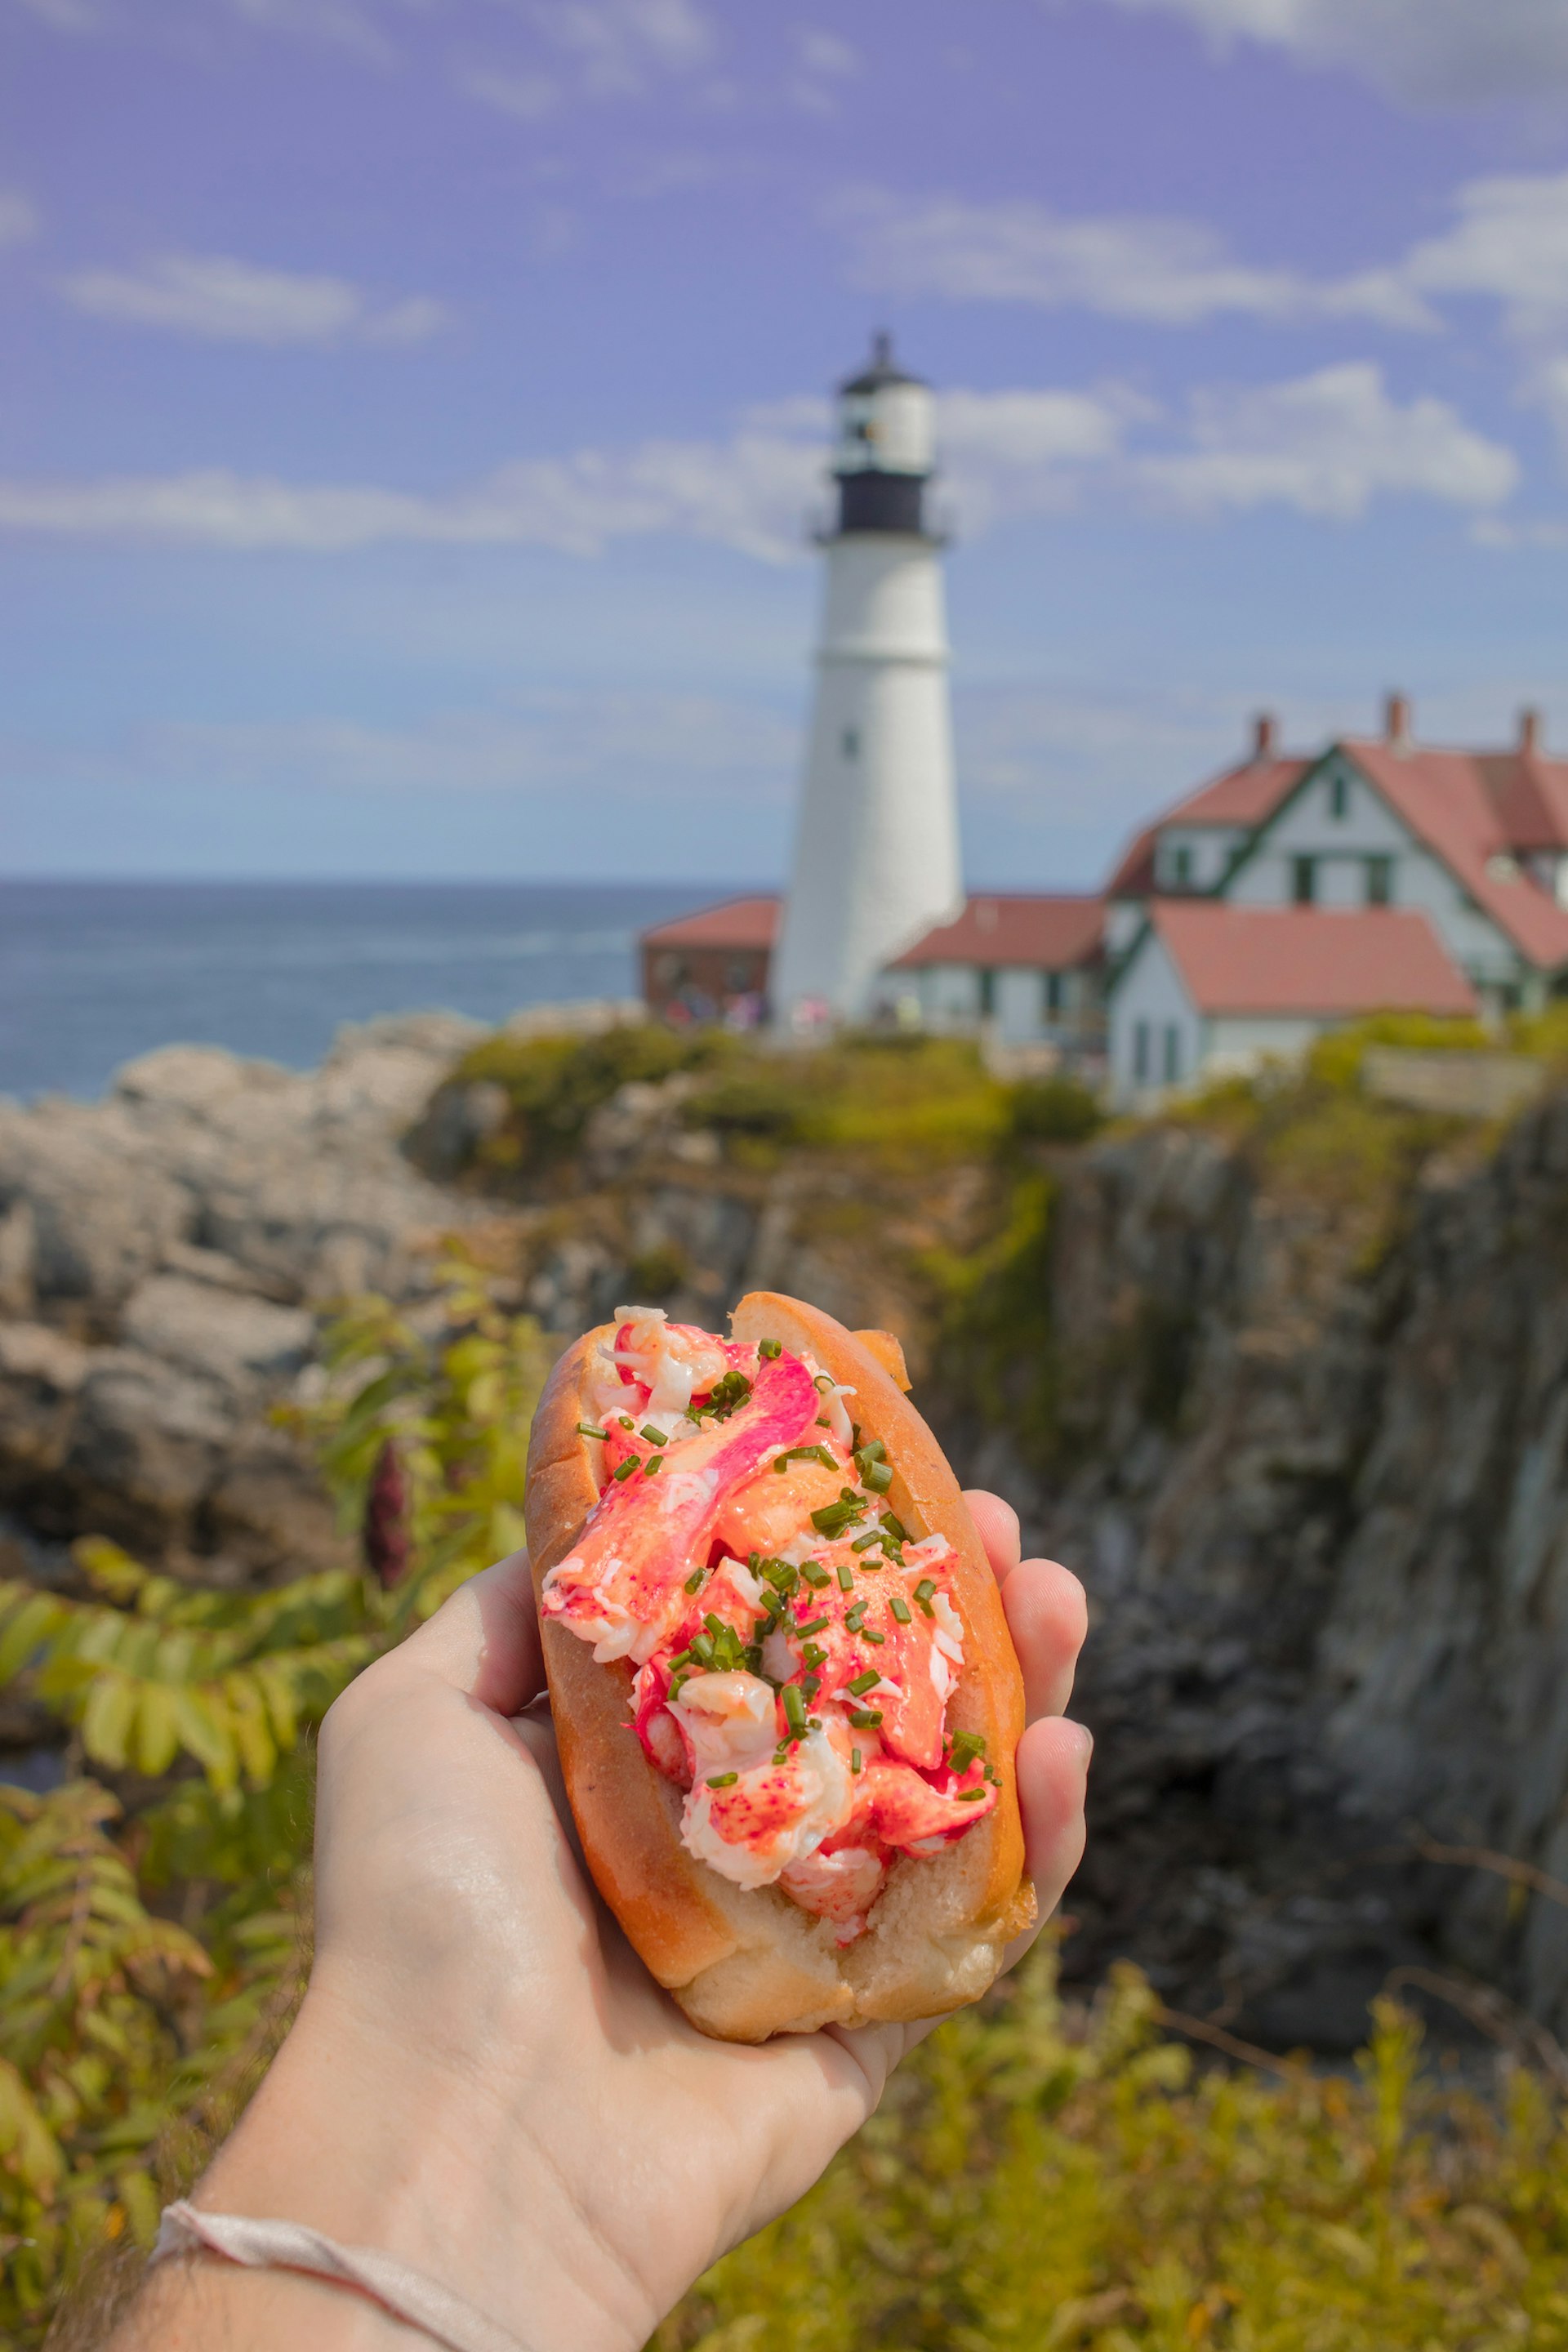 A lobster roll is held aloft in a coastal setting